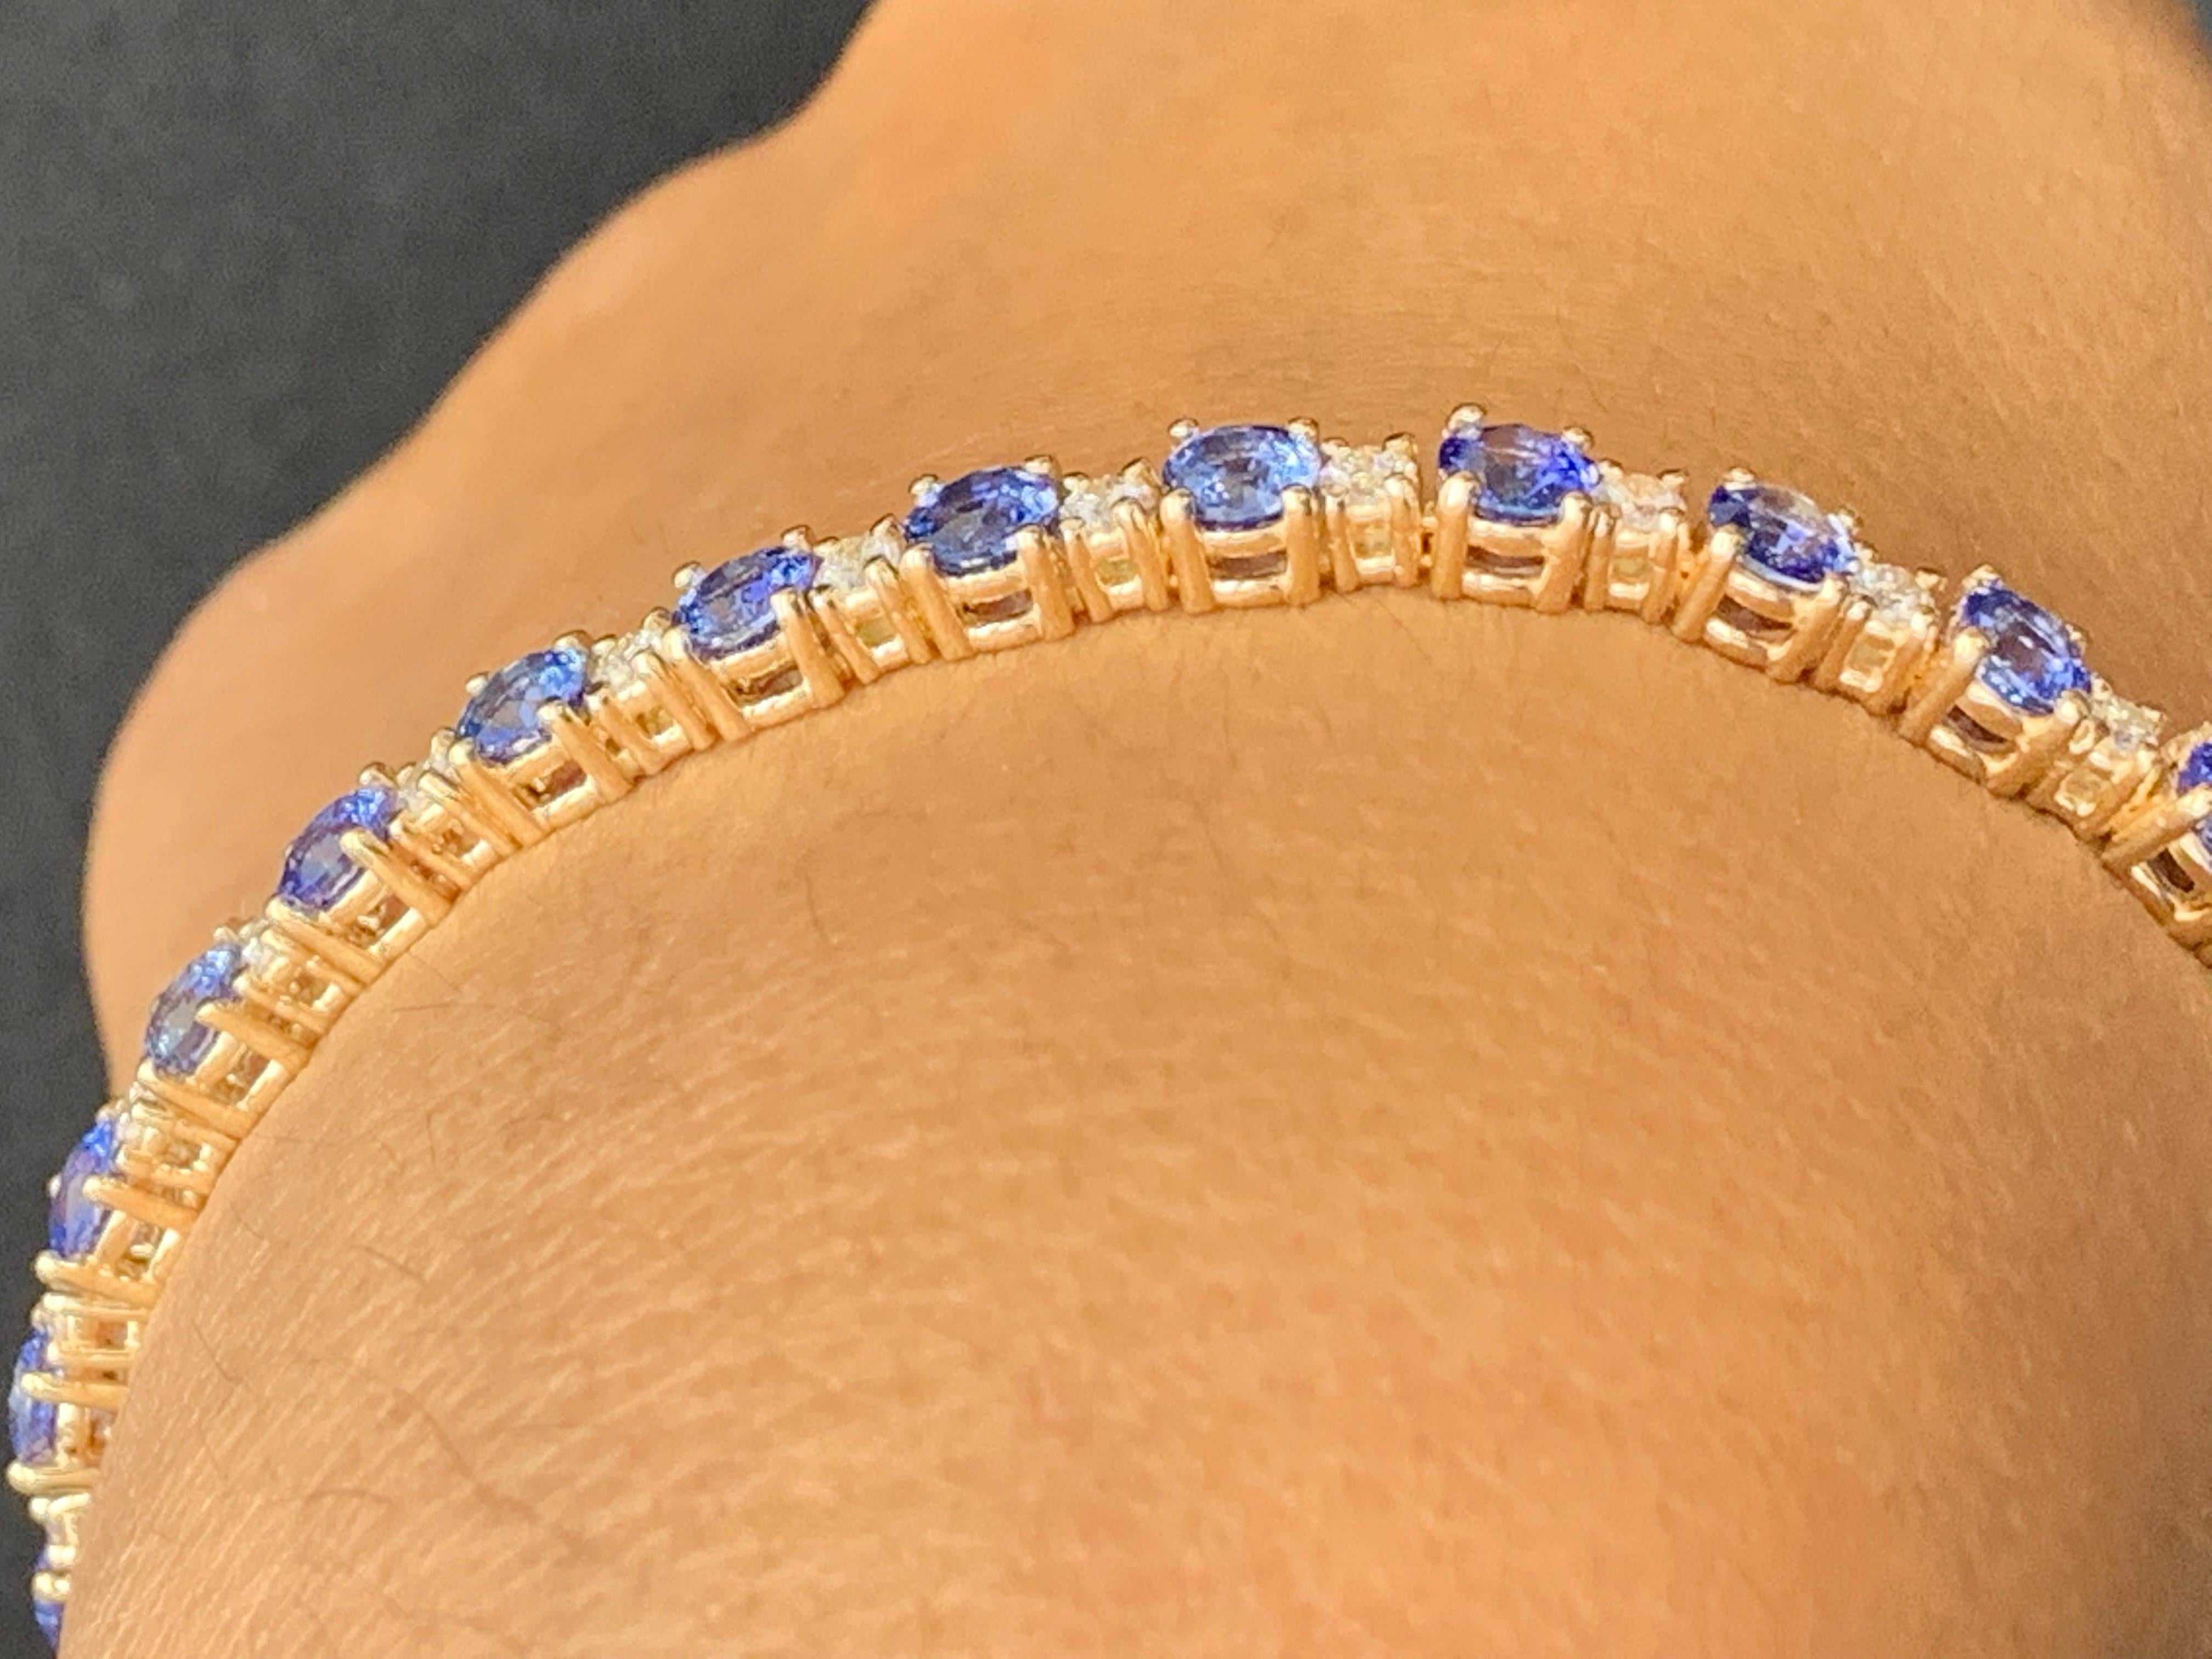 Brilliant Cut 7.80 Carat Alternating Sapphire and Diamond Tennis Bracelet in 14K Yellow Gold For Sale